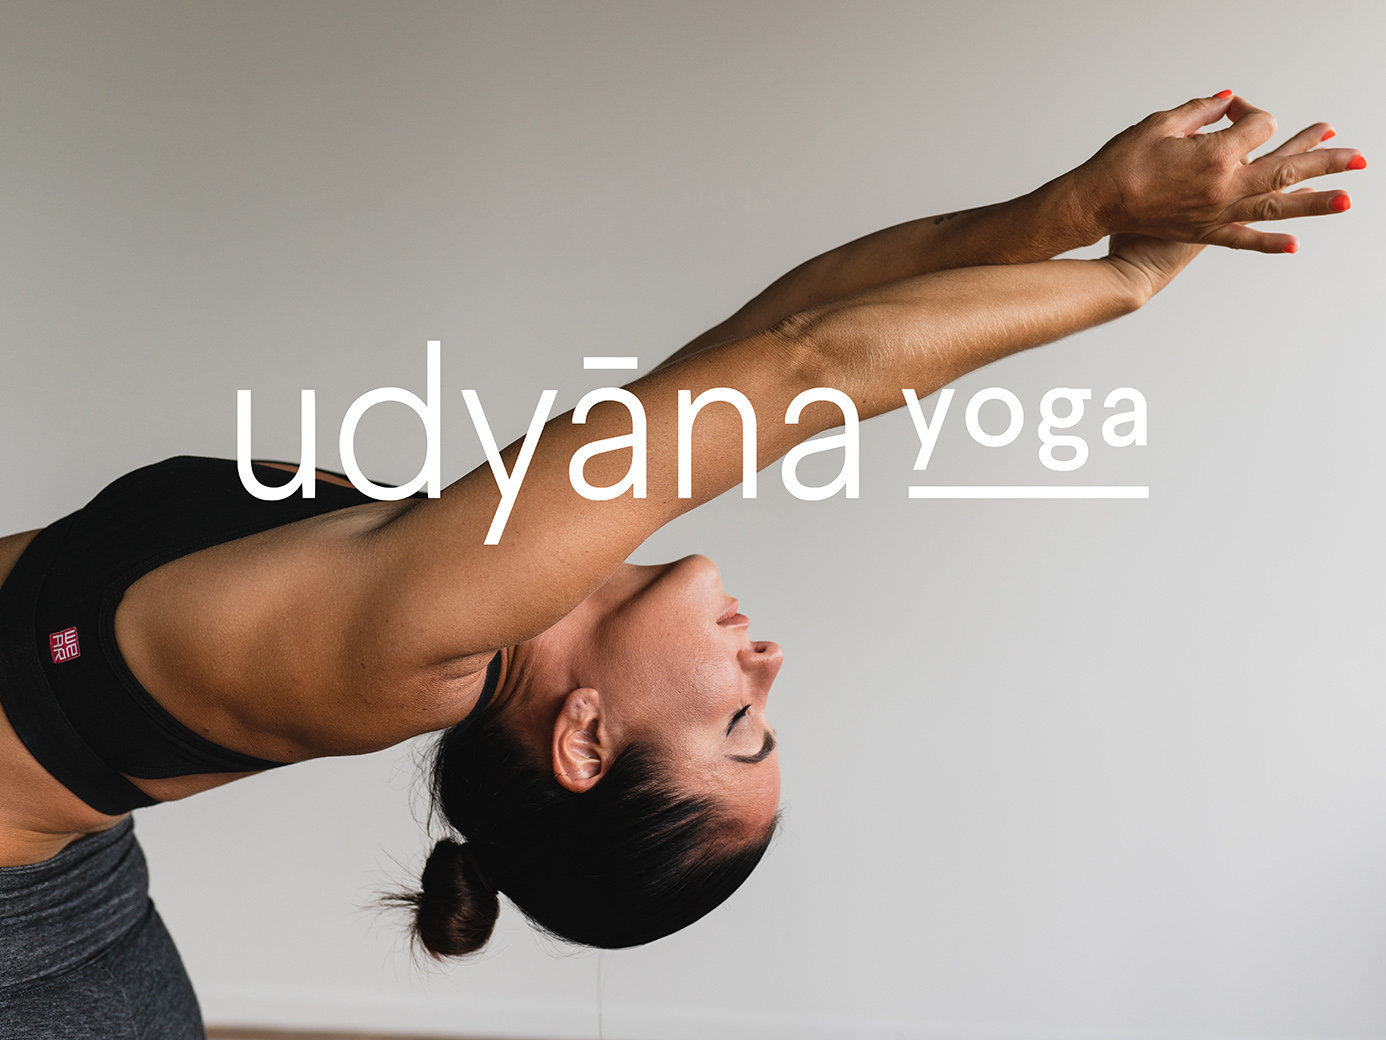 udyana_logo_yoga_pose